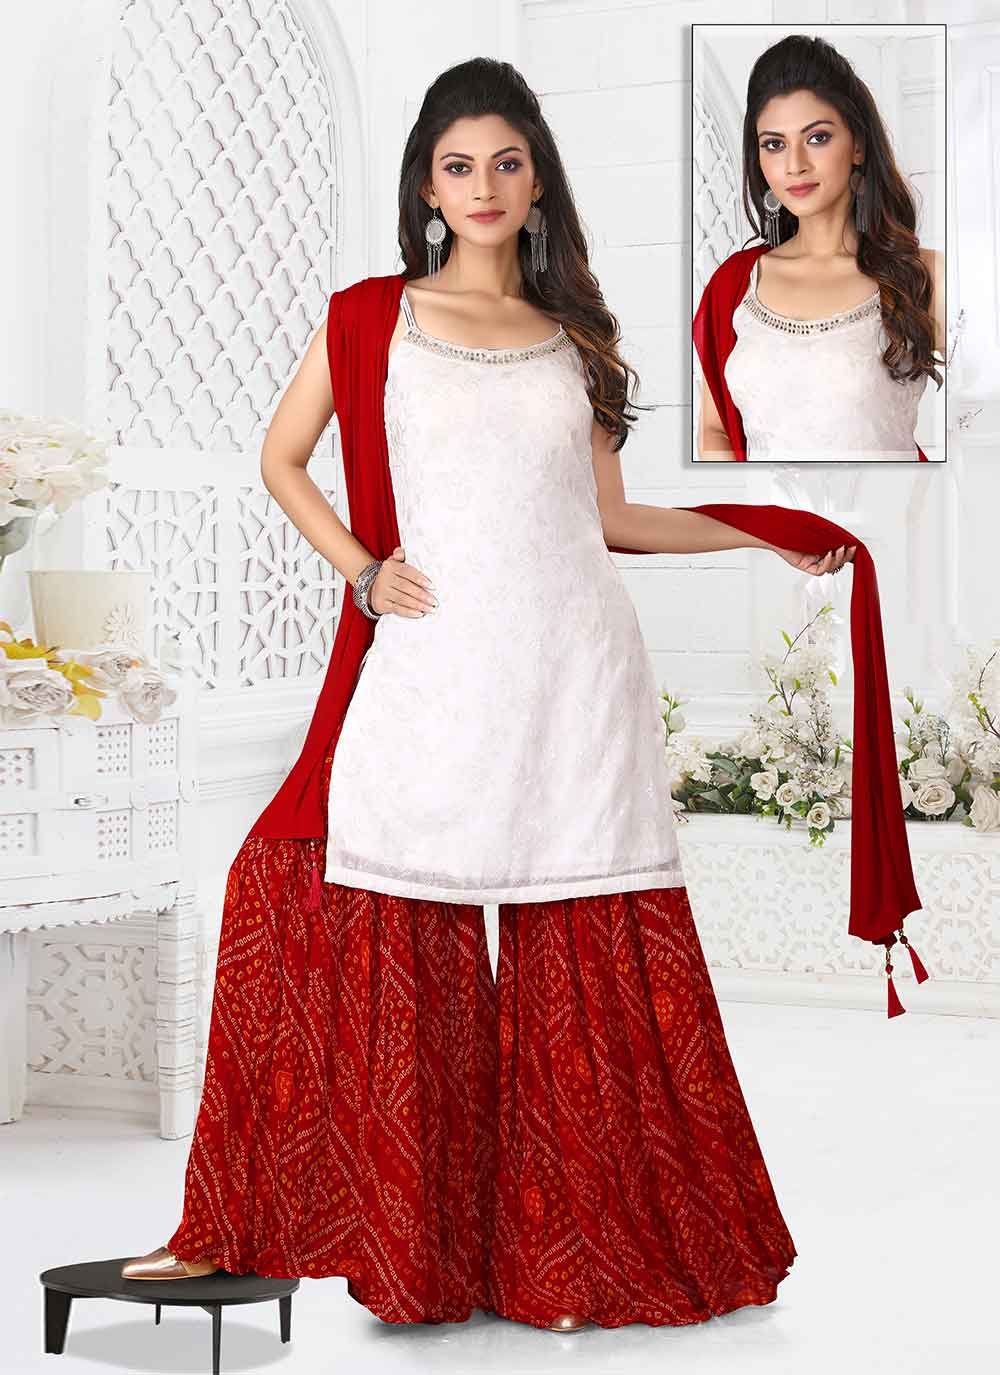 Wine colour off white top | Women dresses classy, Simple pakistani dresses,  Beautiful dresses